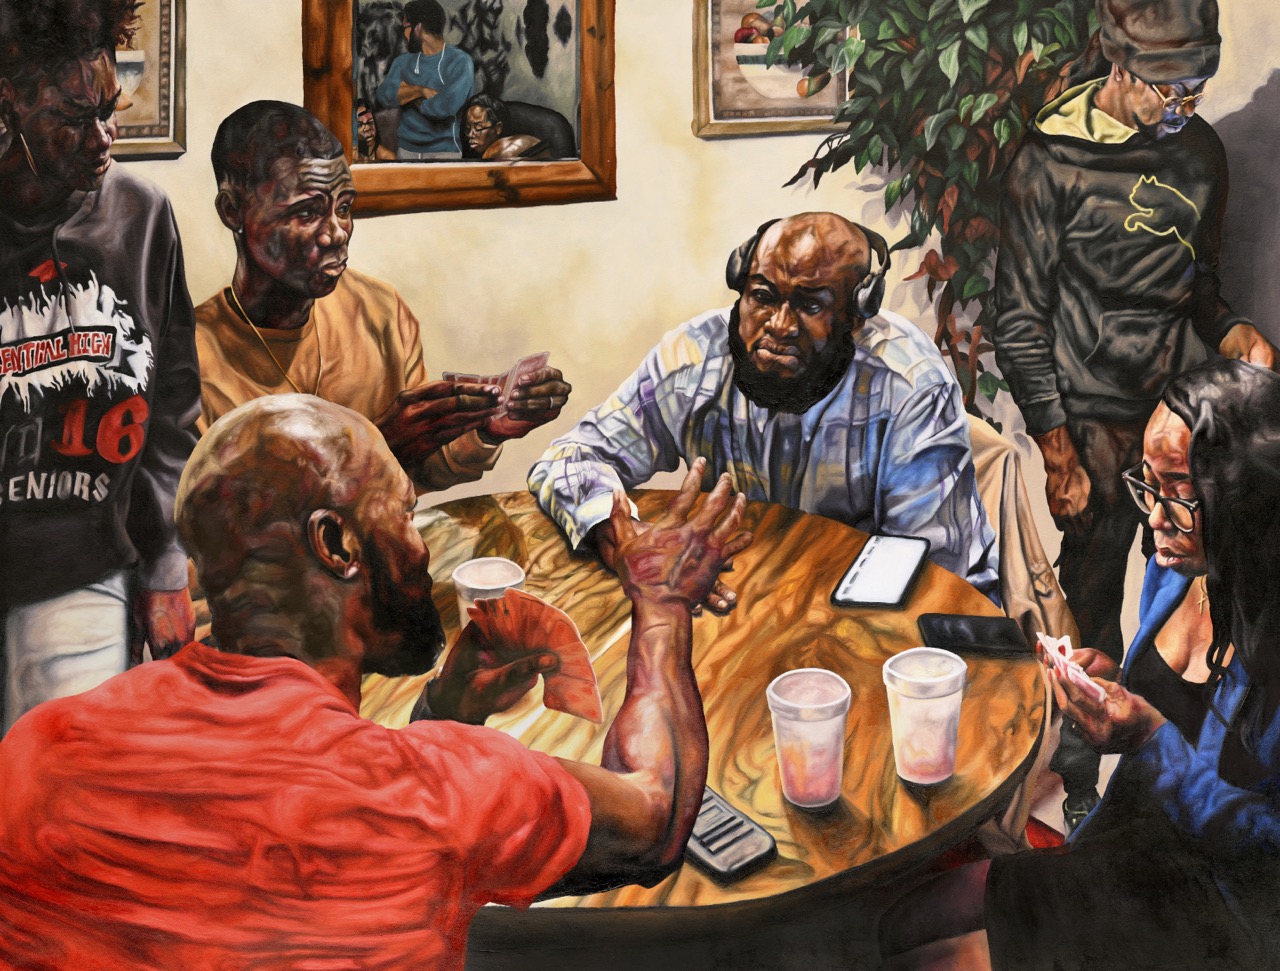 Narrative art - "Talkin' Across the Table" by Tim Short